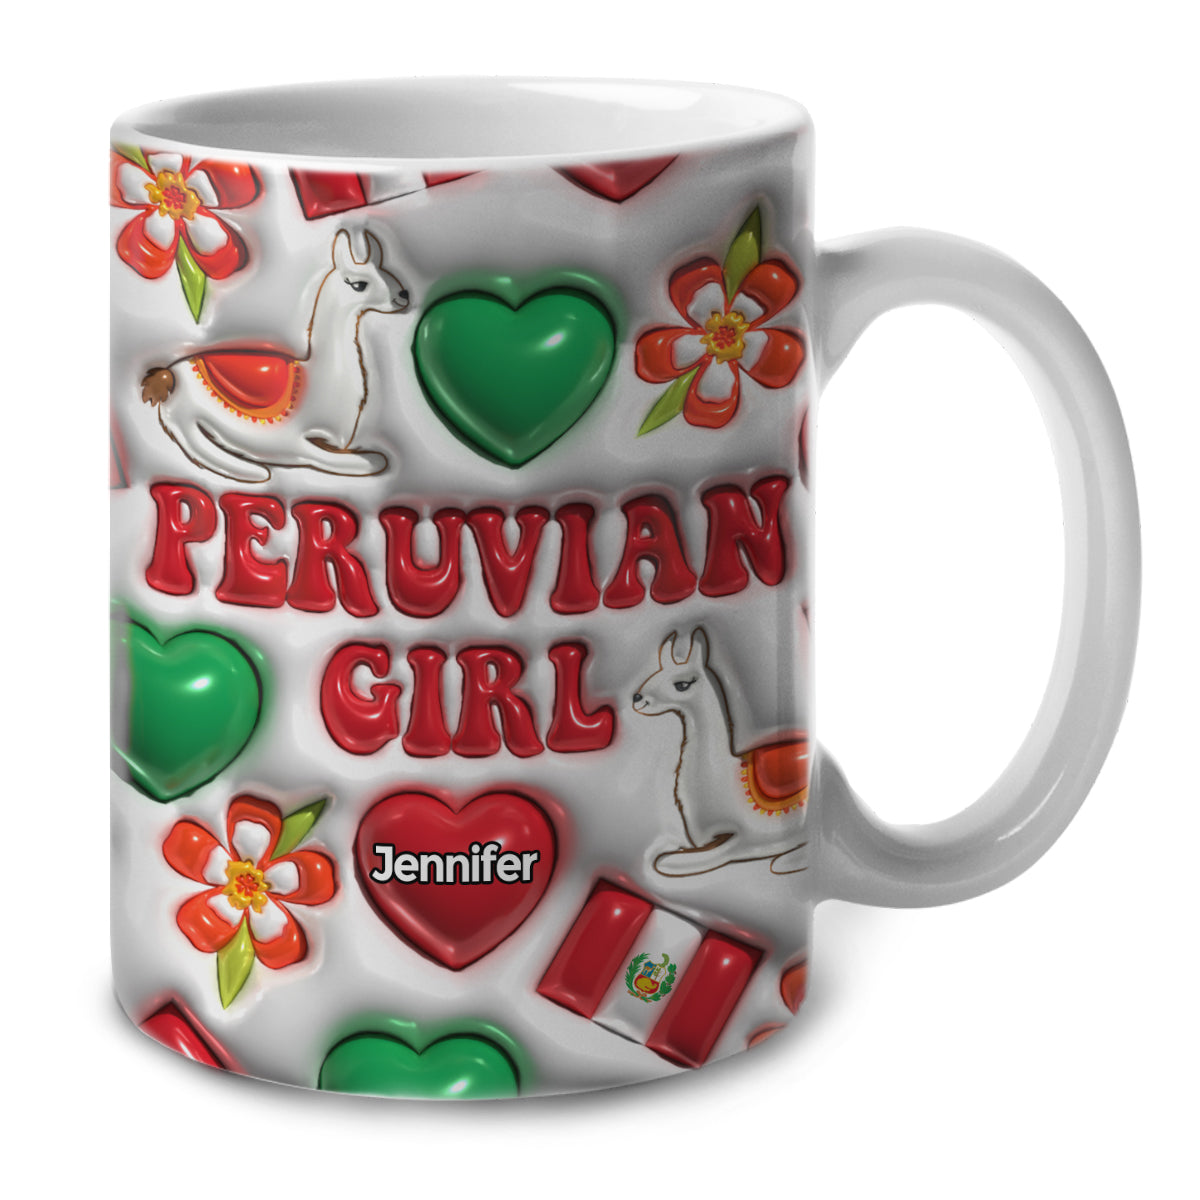 Peru Peruvian Girl Coffee Mug Cup With Custom Your Name